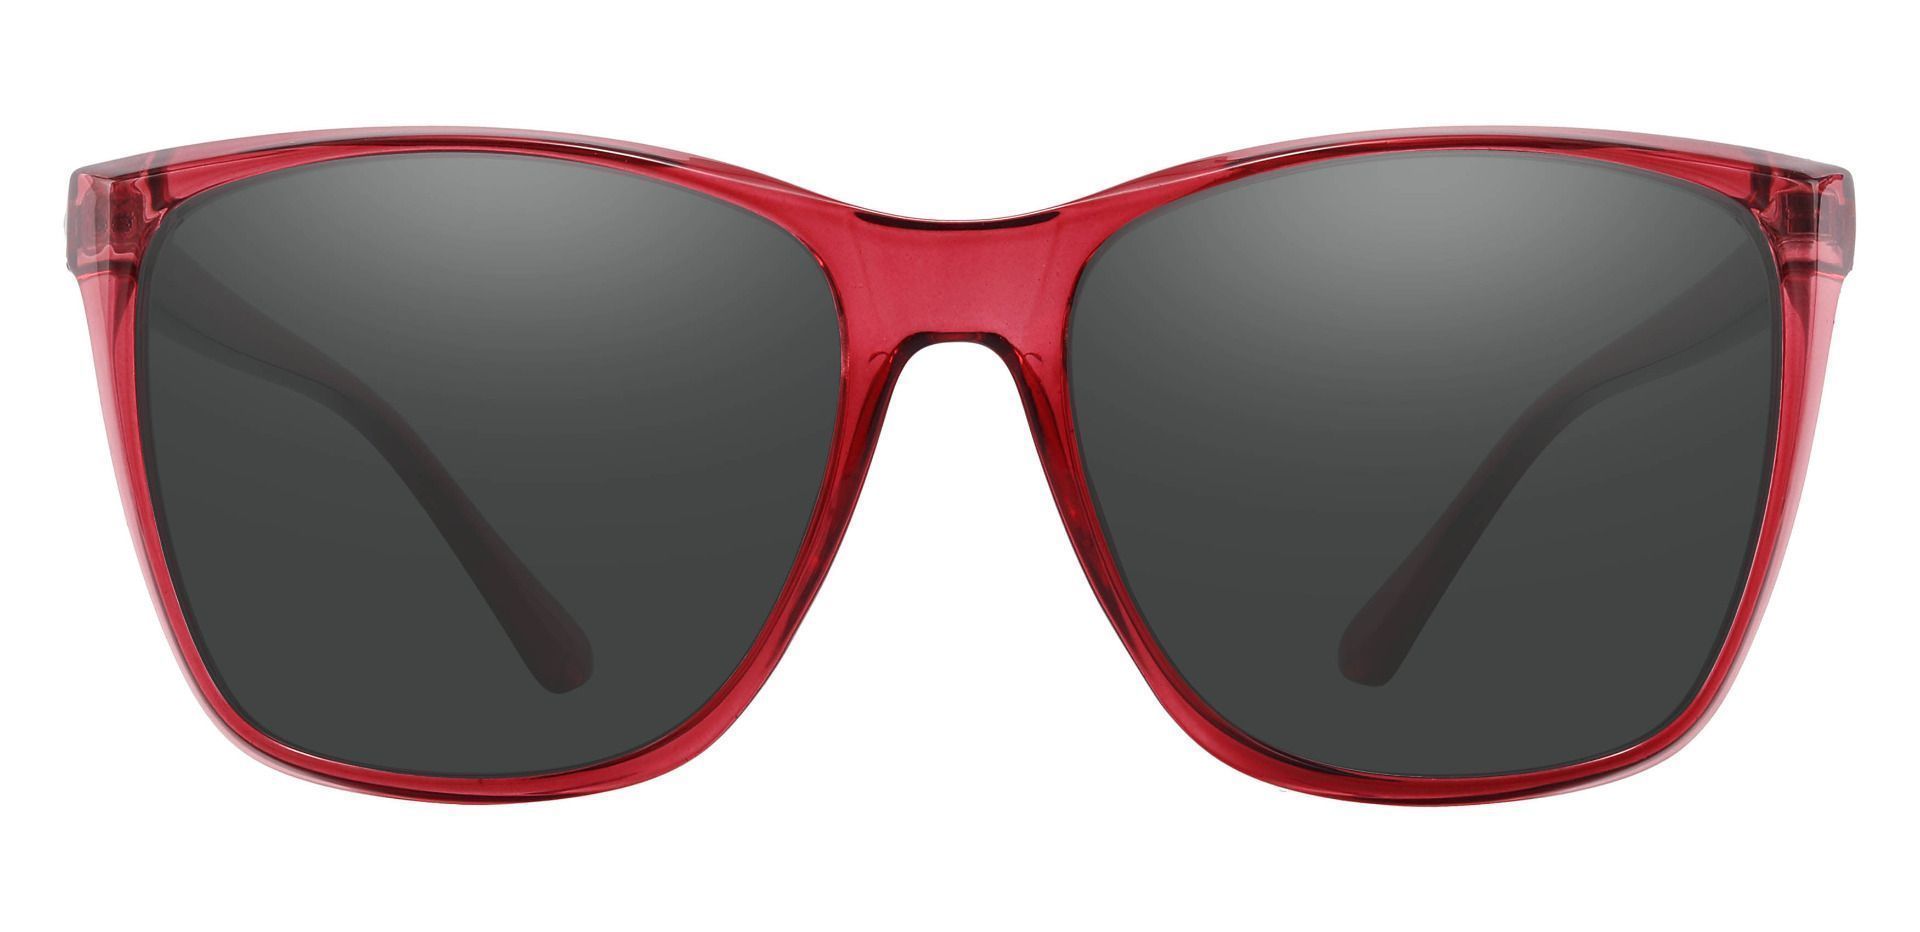 Taryn Square Prescription Sunglasses - Red Frame With Gray Lenses